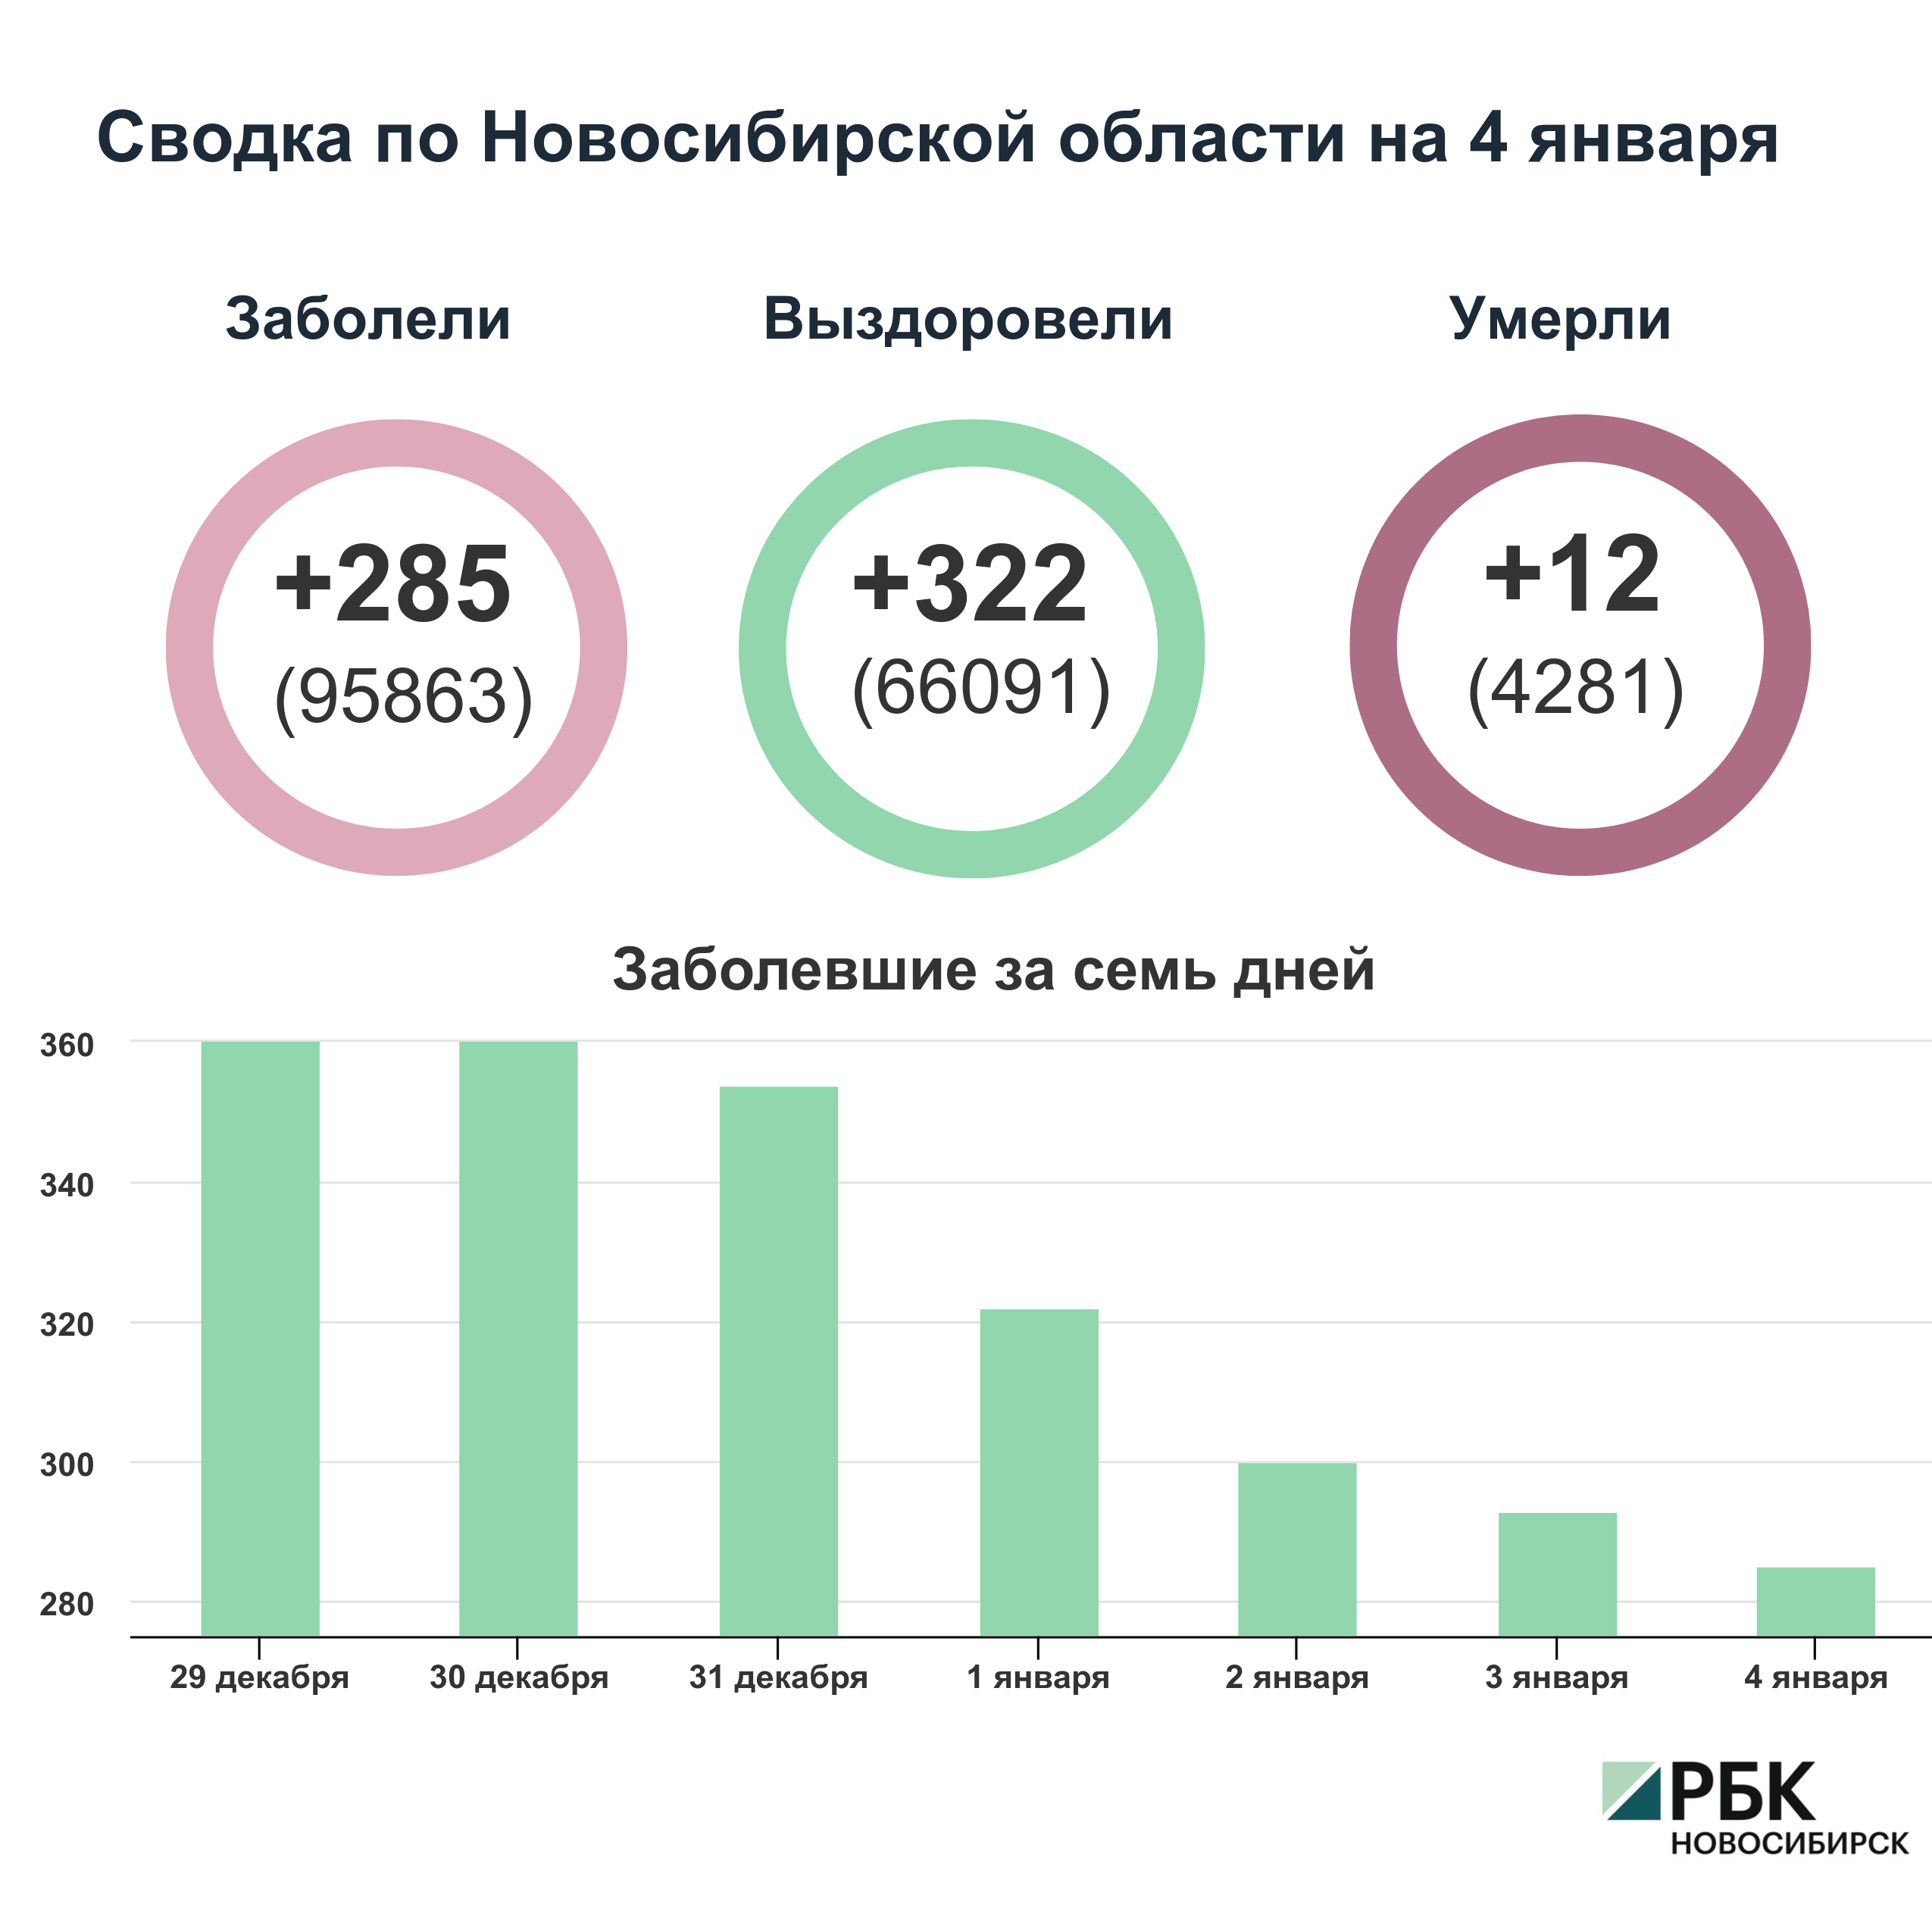 Коронавирус в Новосибирске: сводка на 4 января